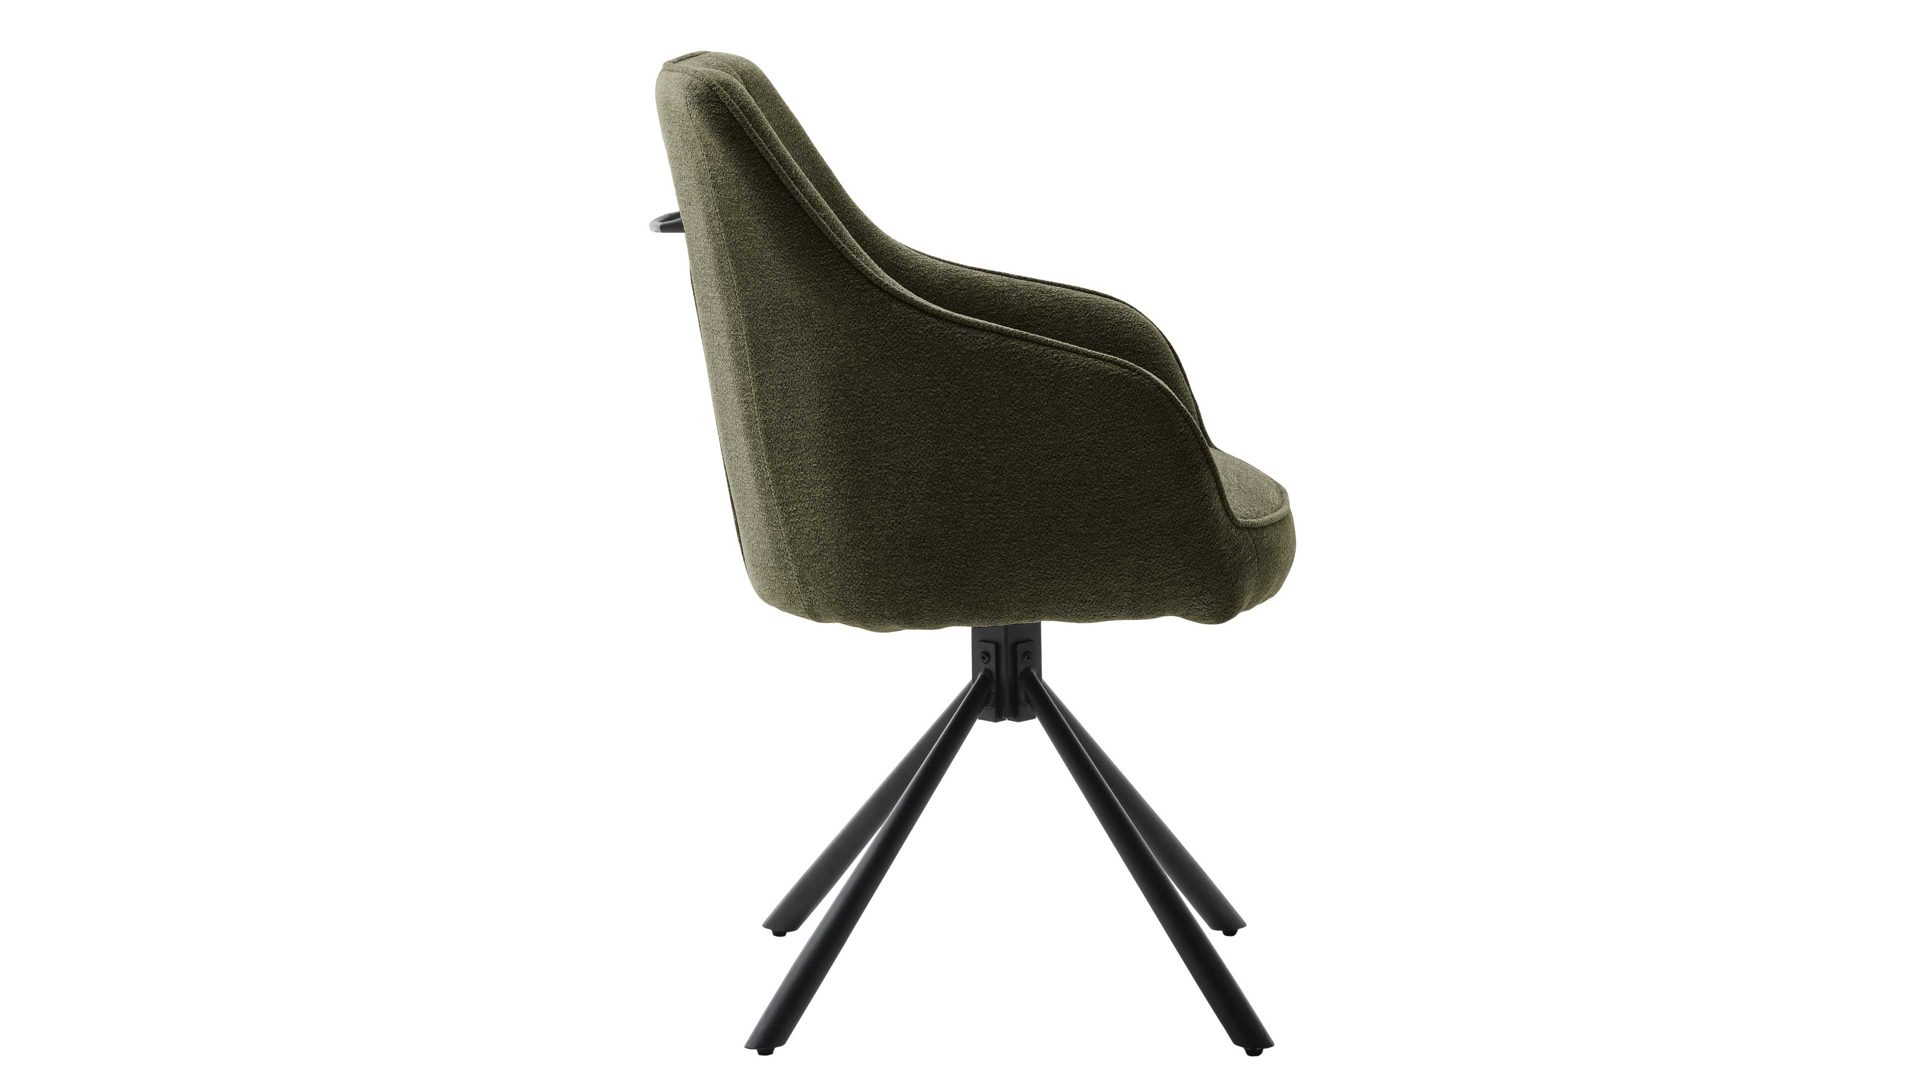 Vierfußstuhl Mca furniture aus Stoff in Dunkelgrün Armlehnstuhl mit Drehfunktion olivgrüner Strukturbezug & schwarzes Metall